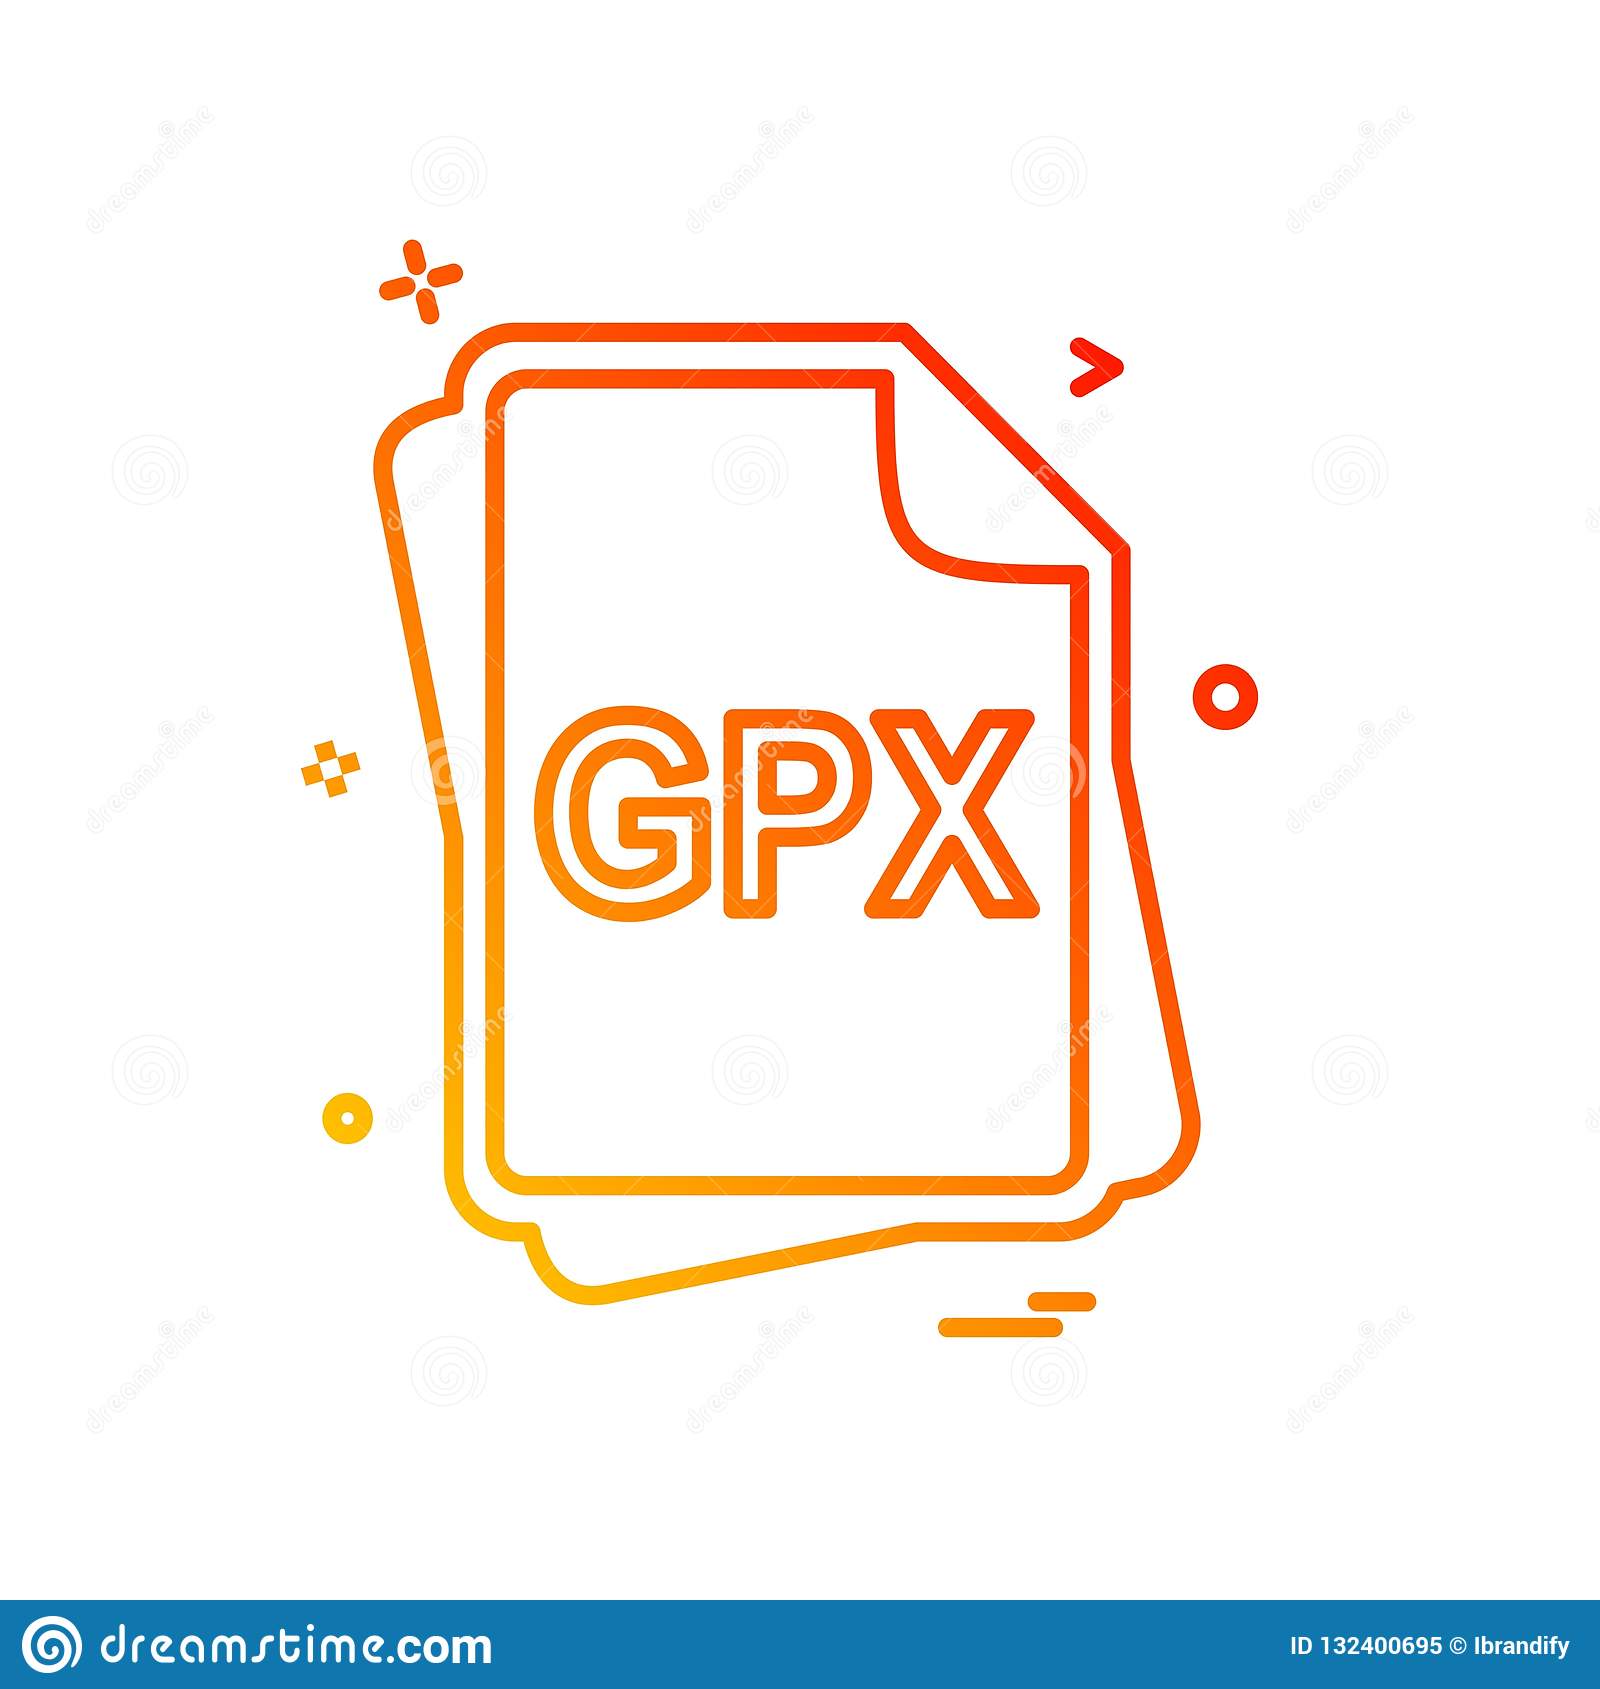 print gpx file